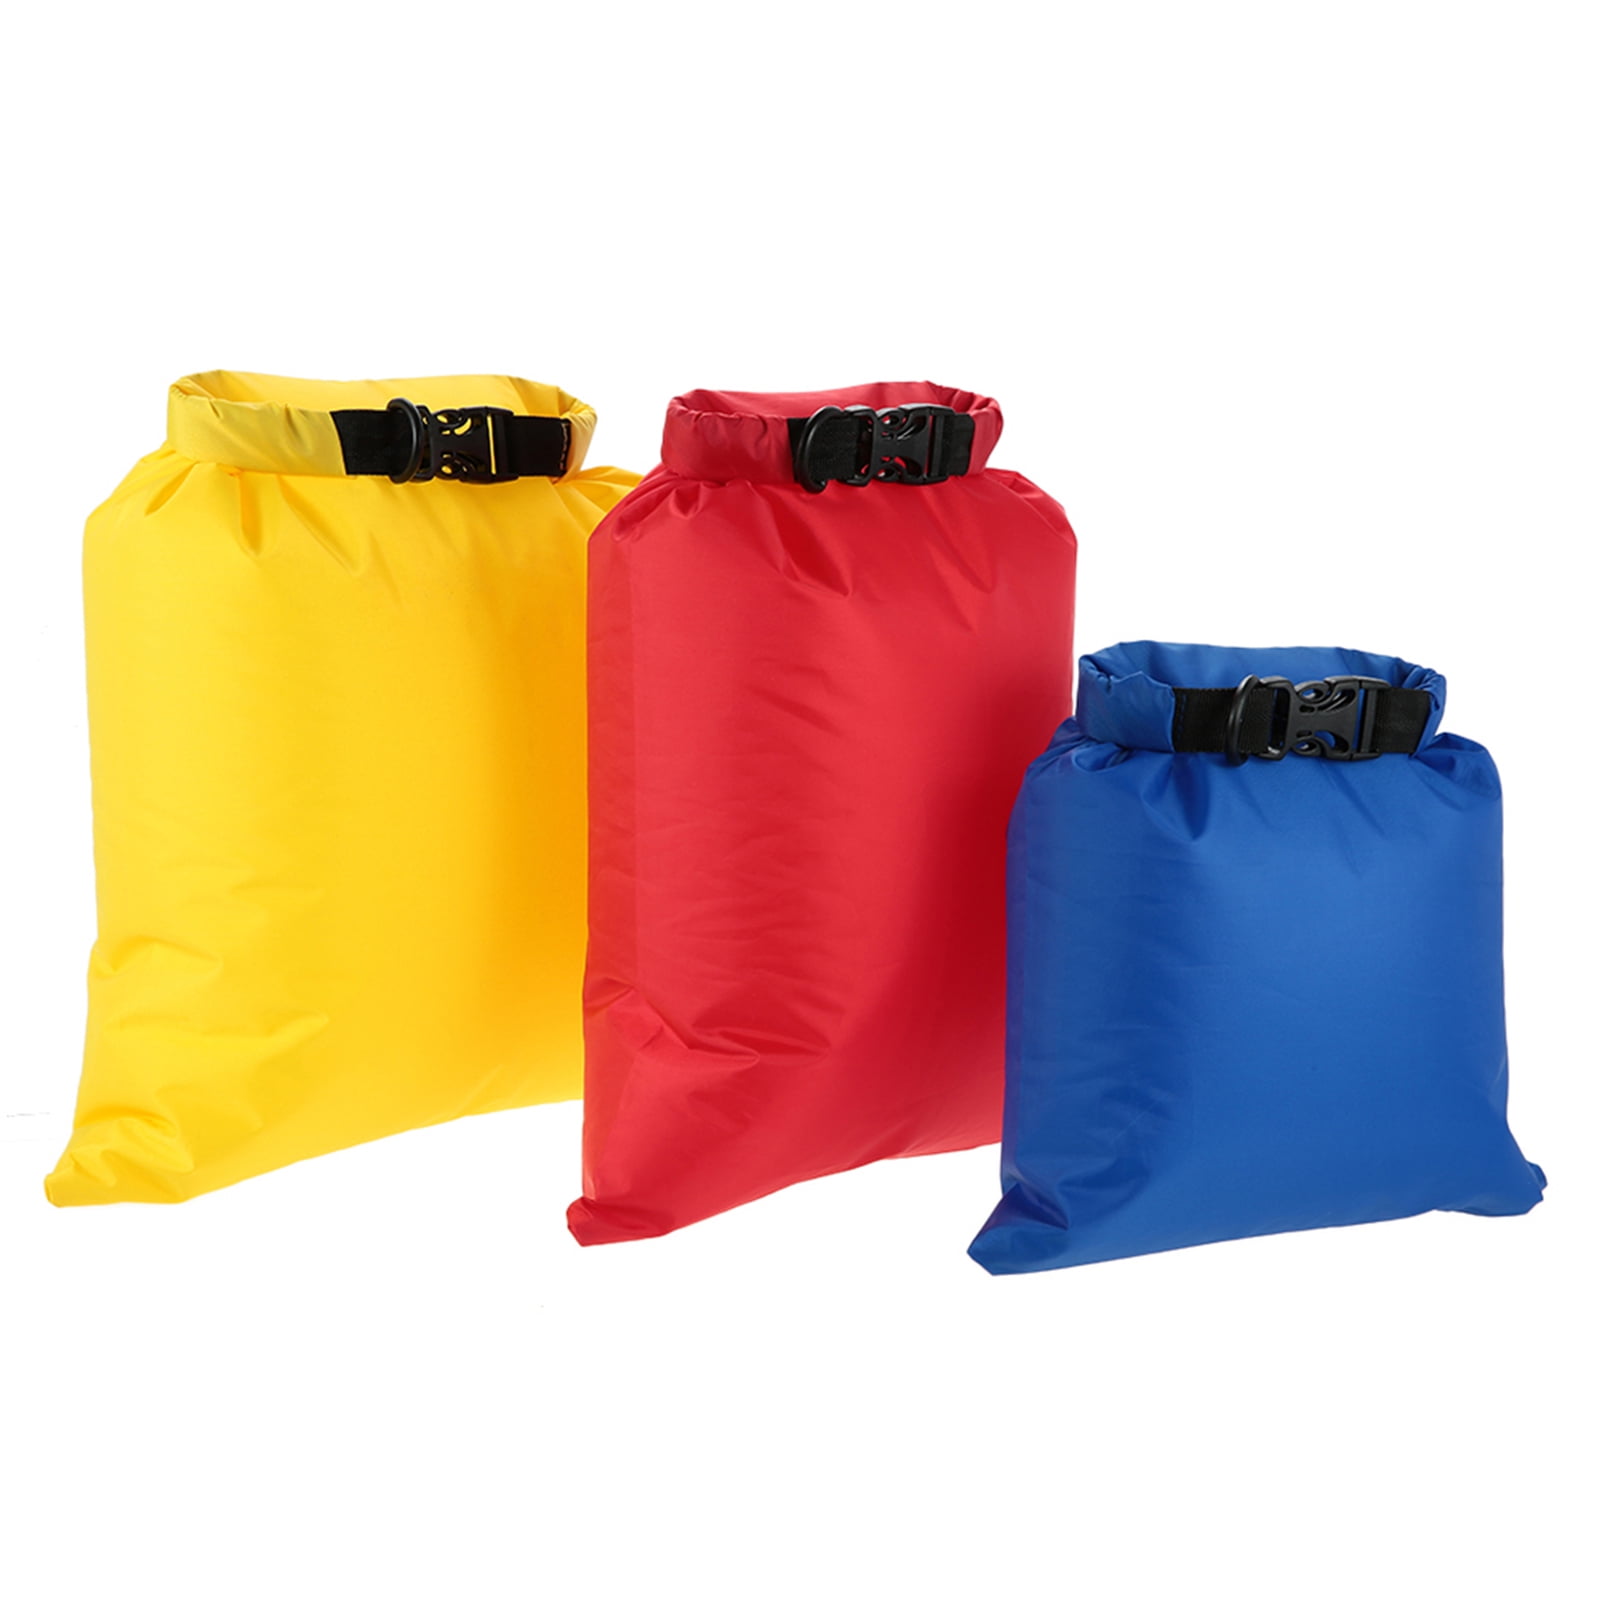 Outdoor Waterproof bag for camping hiking with hook zipper storage bag PouchJKU 